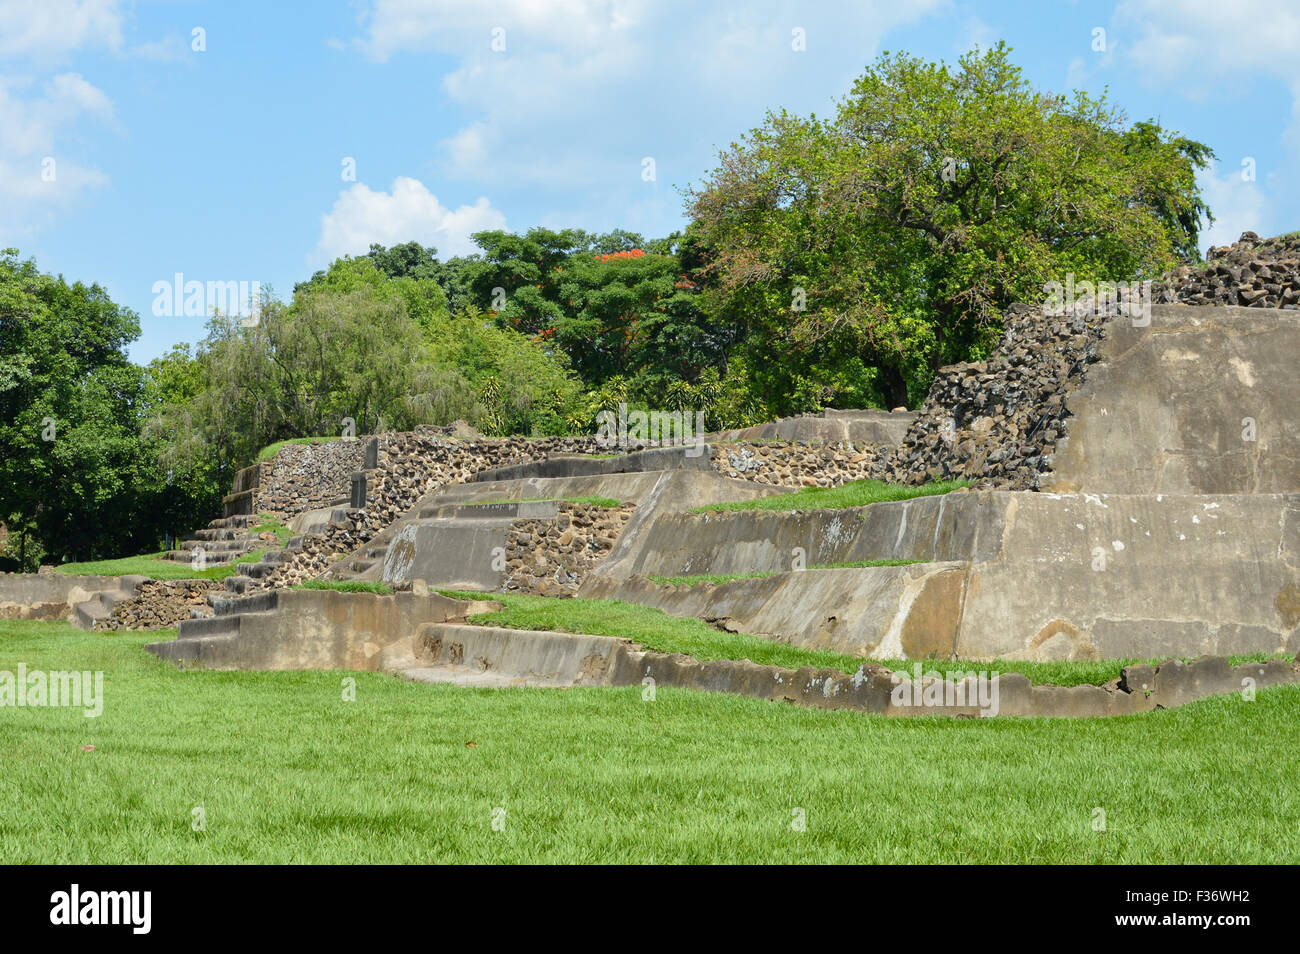 Tazumal sito archeologico della civiltà Maya in El Salvador Foto Stock